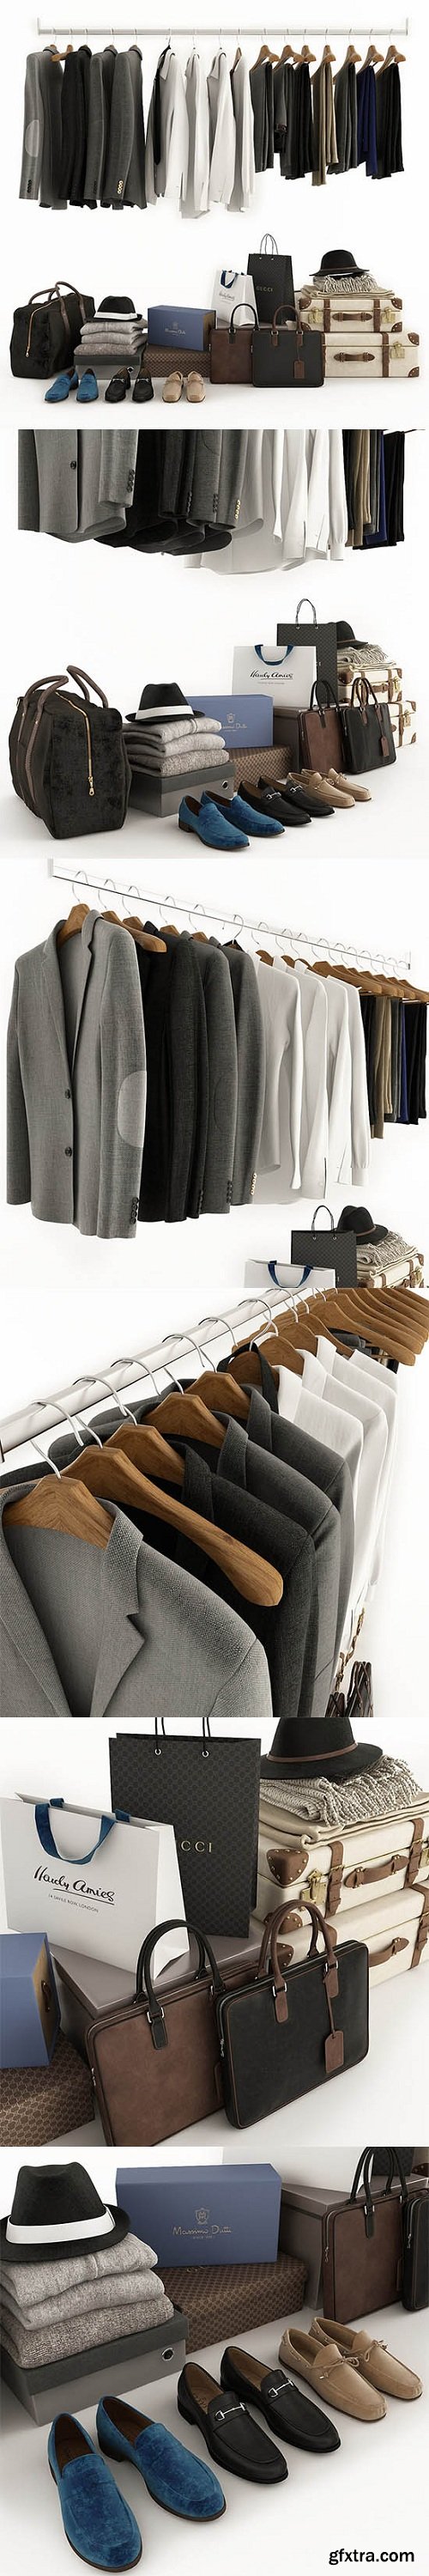 Clothing for Wardrobe